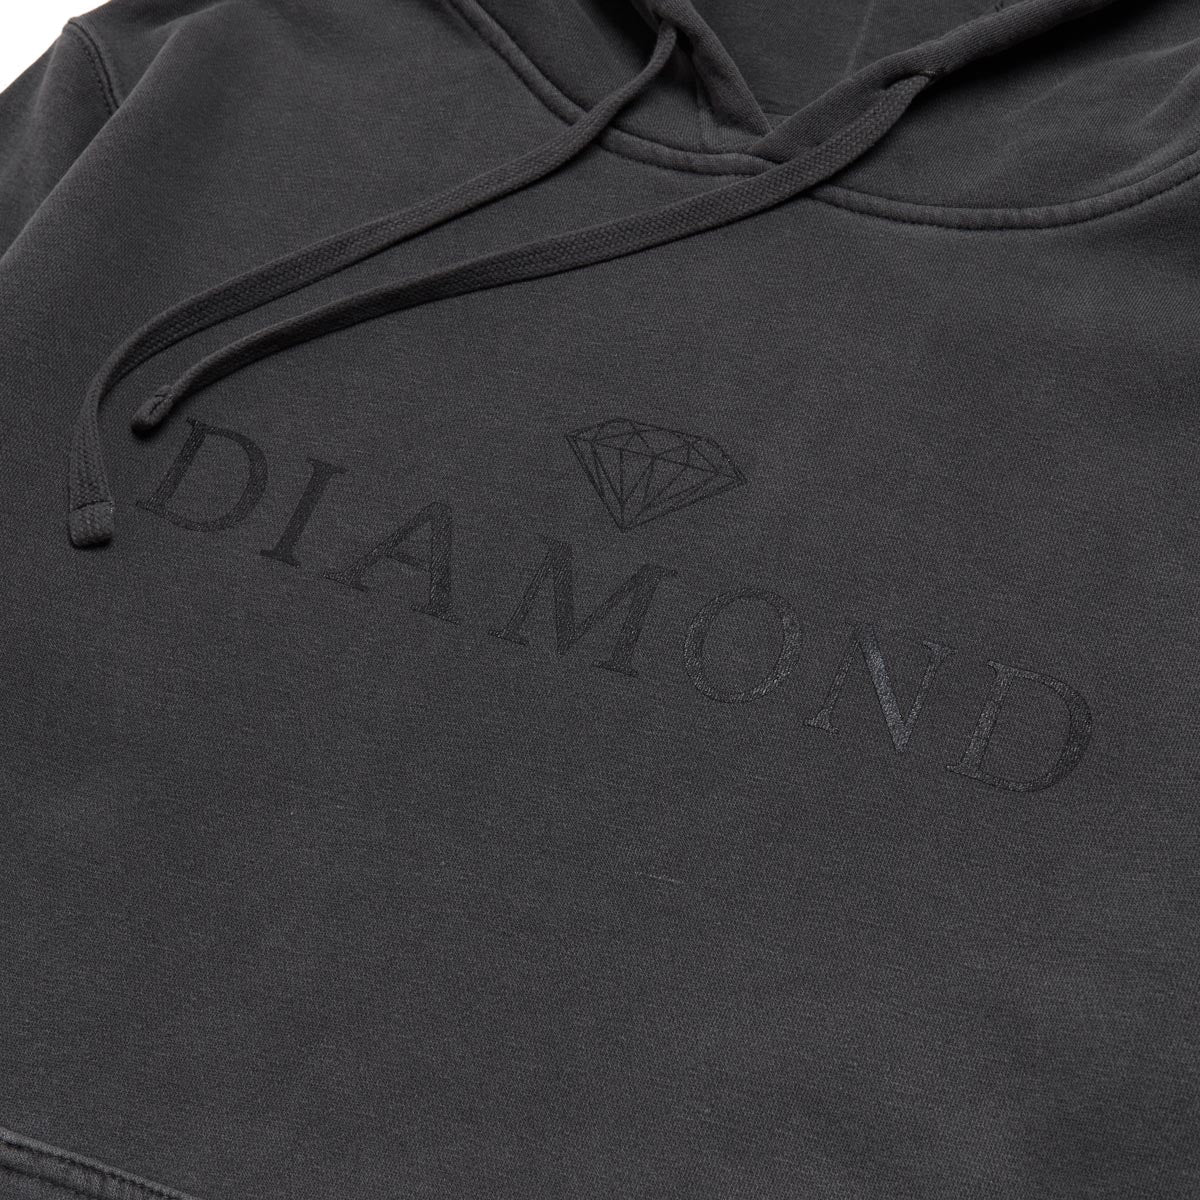 Diamond Supply Co. Classic Hoodie - Pigment Black image 2